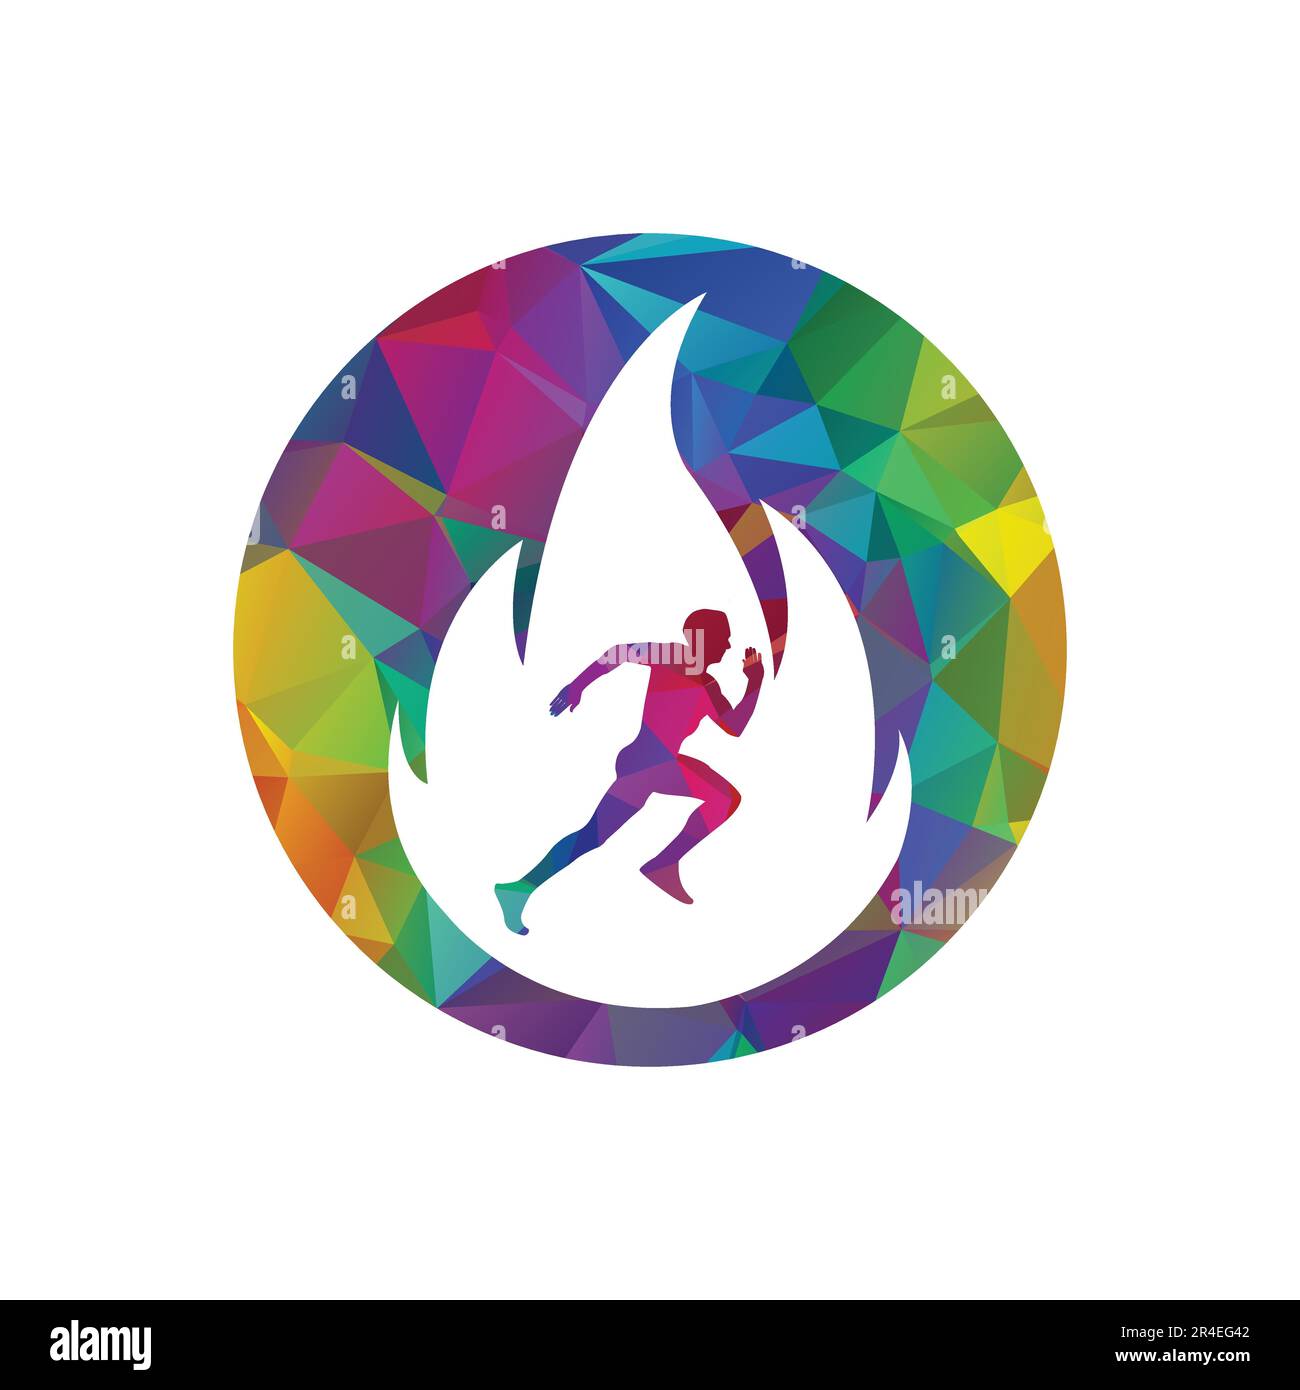 Female runner athletic logo design icon symbol Vector Image